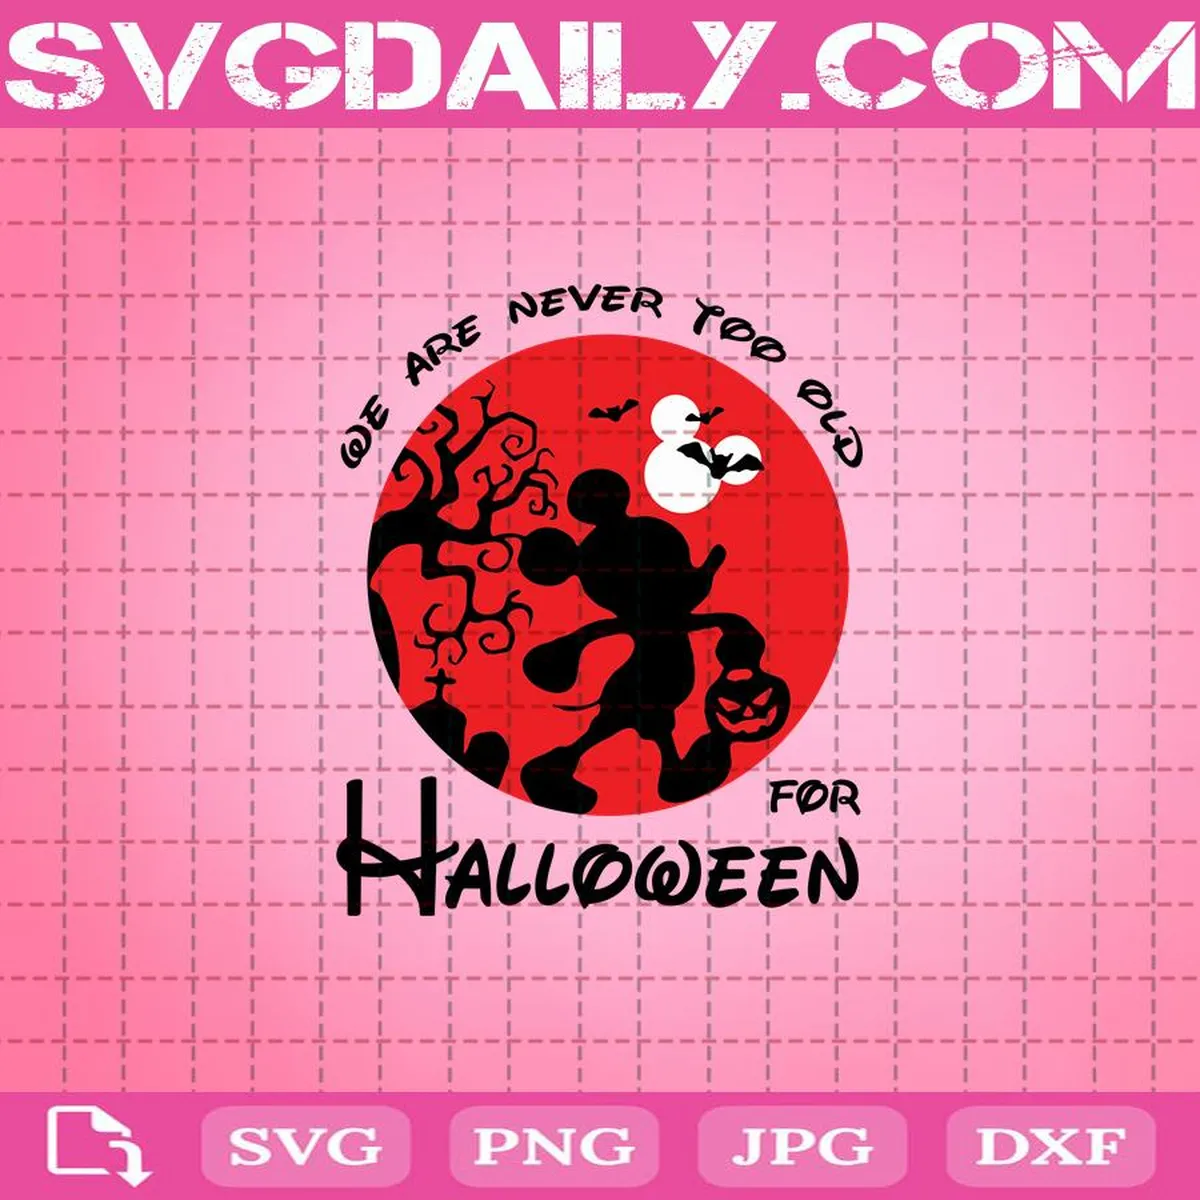 We Are Never Too Old For Halloween Svg, Halloween Svg, Mickey Svg, Disney Svg, Pumpkin Svg, Happy Halloween Svg